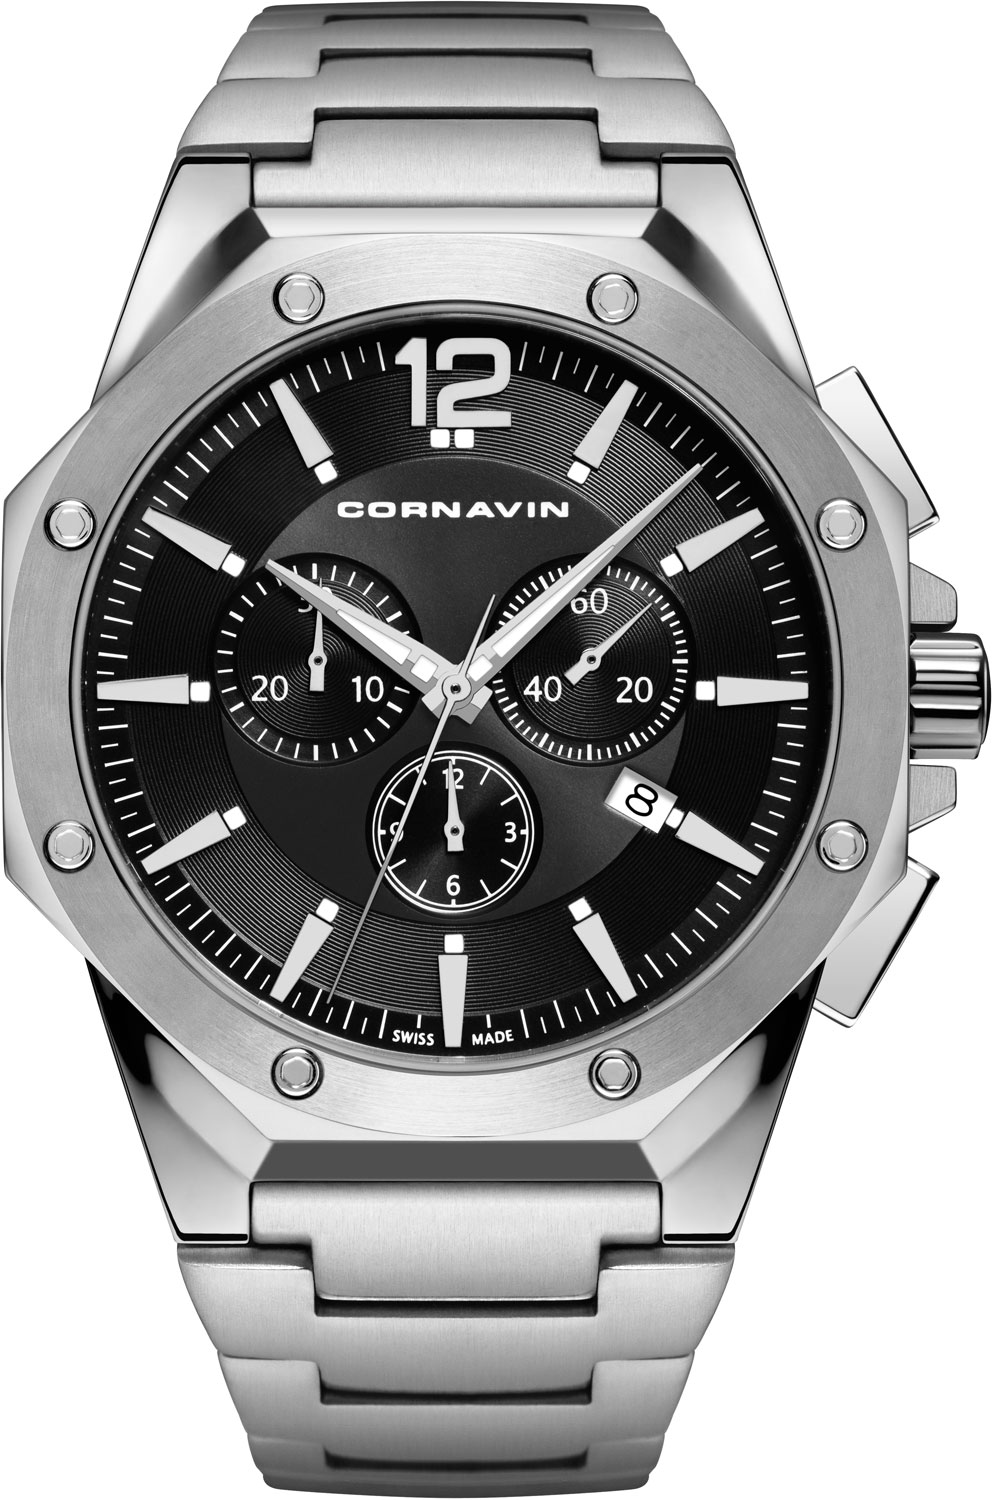 Швейцарские наручные часы Cornavin CO.2010-2003 с хронографом